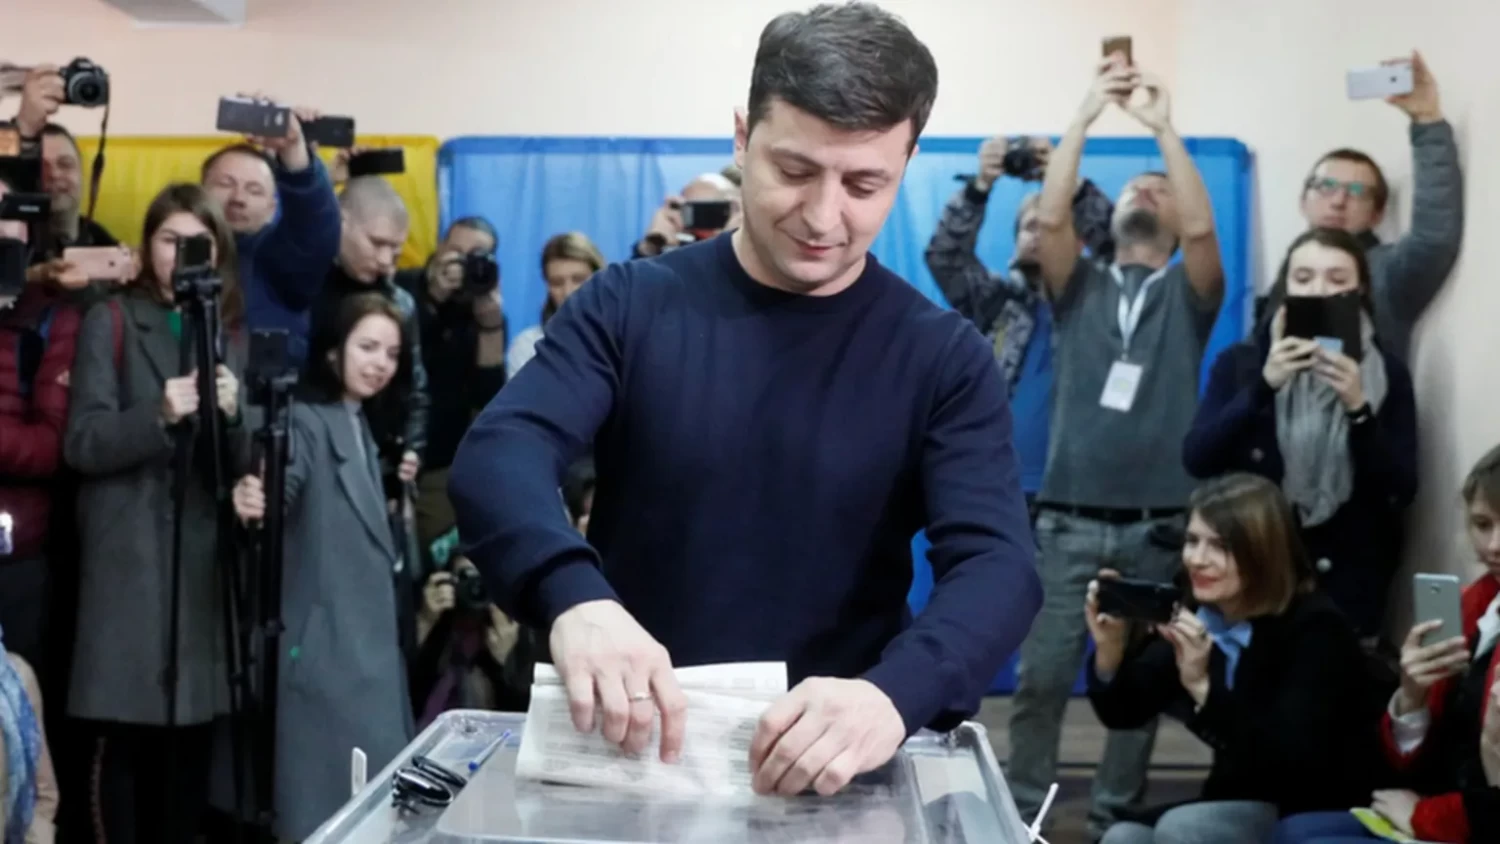 Reuters / Volodymyr Zelensky was elected as Ukraine's president in 2019